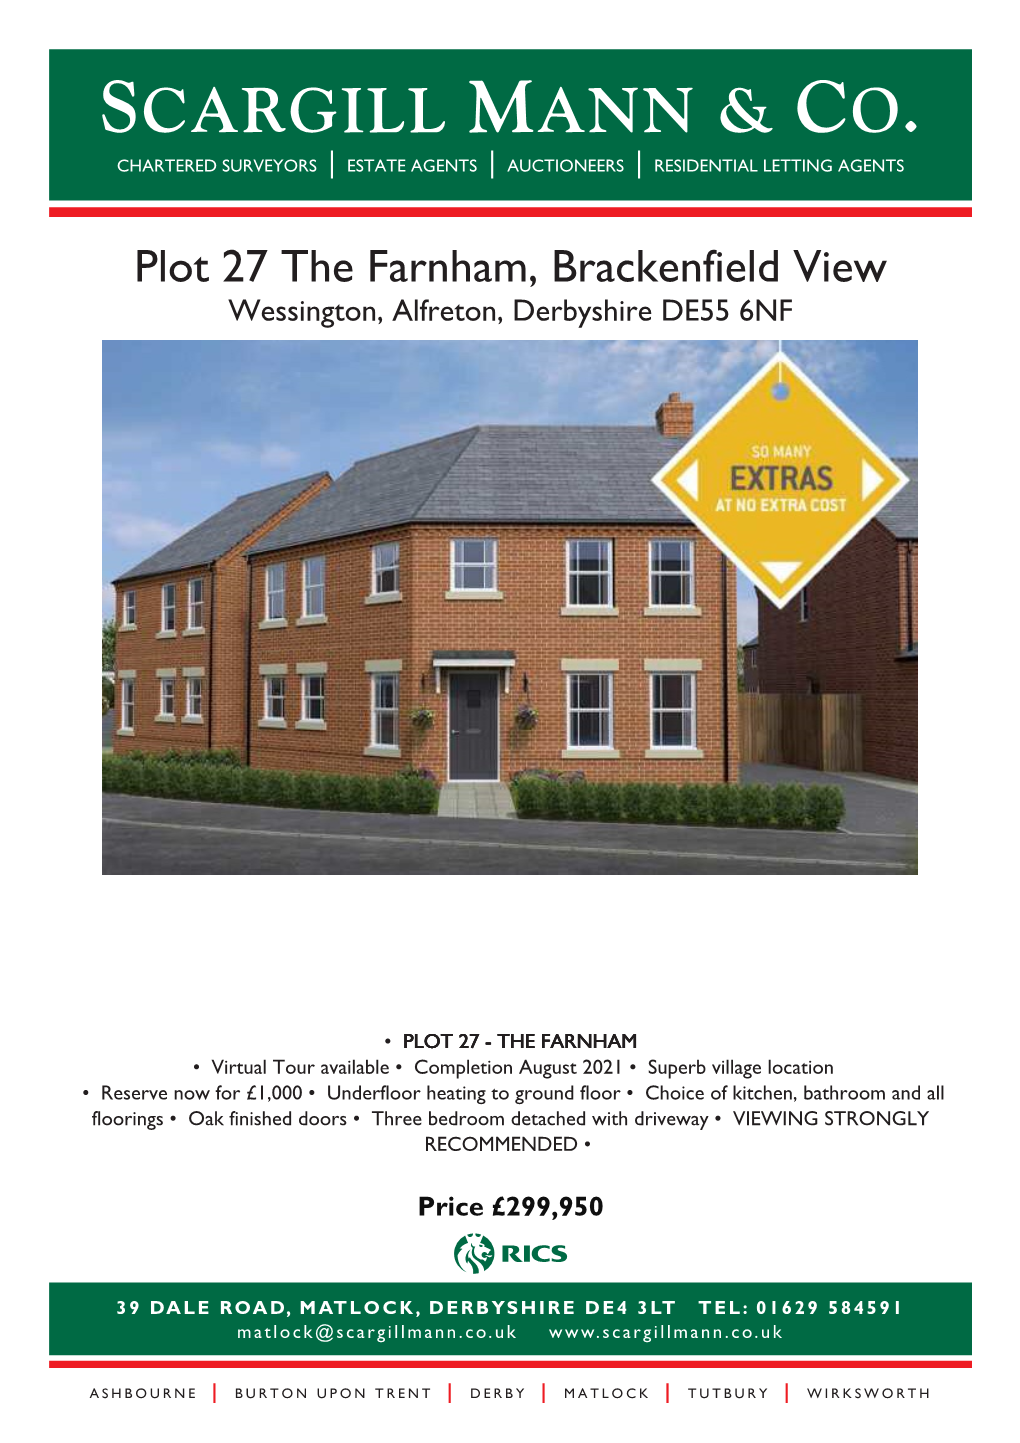 Plot 27 the Farnham, Brackenfield View Wessington, Alfreton, Derbyshire DE55 6NF